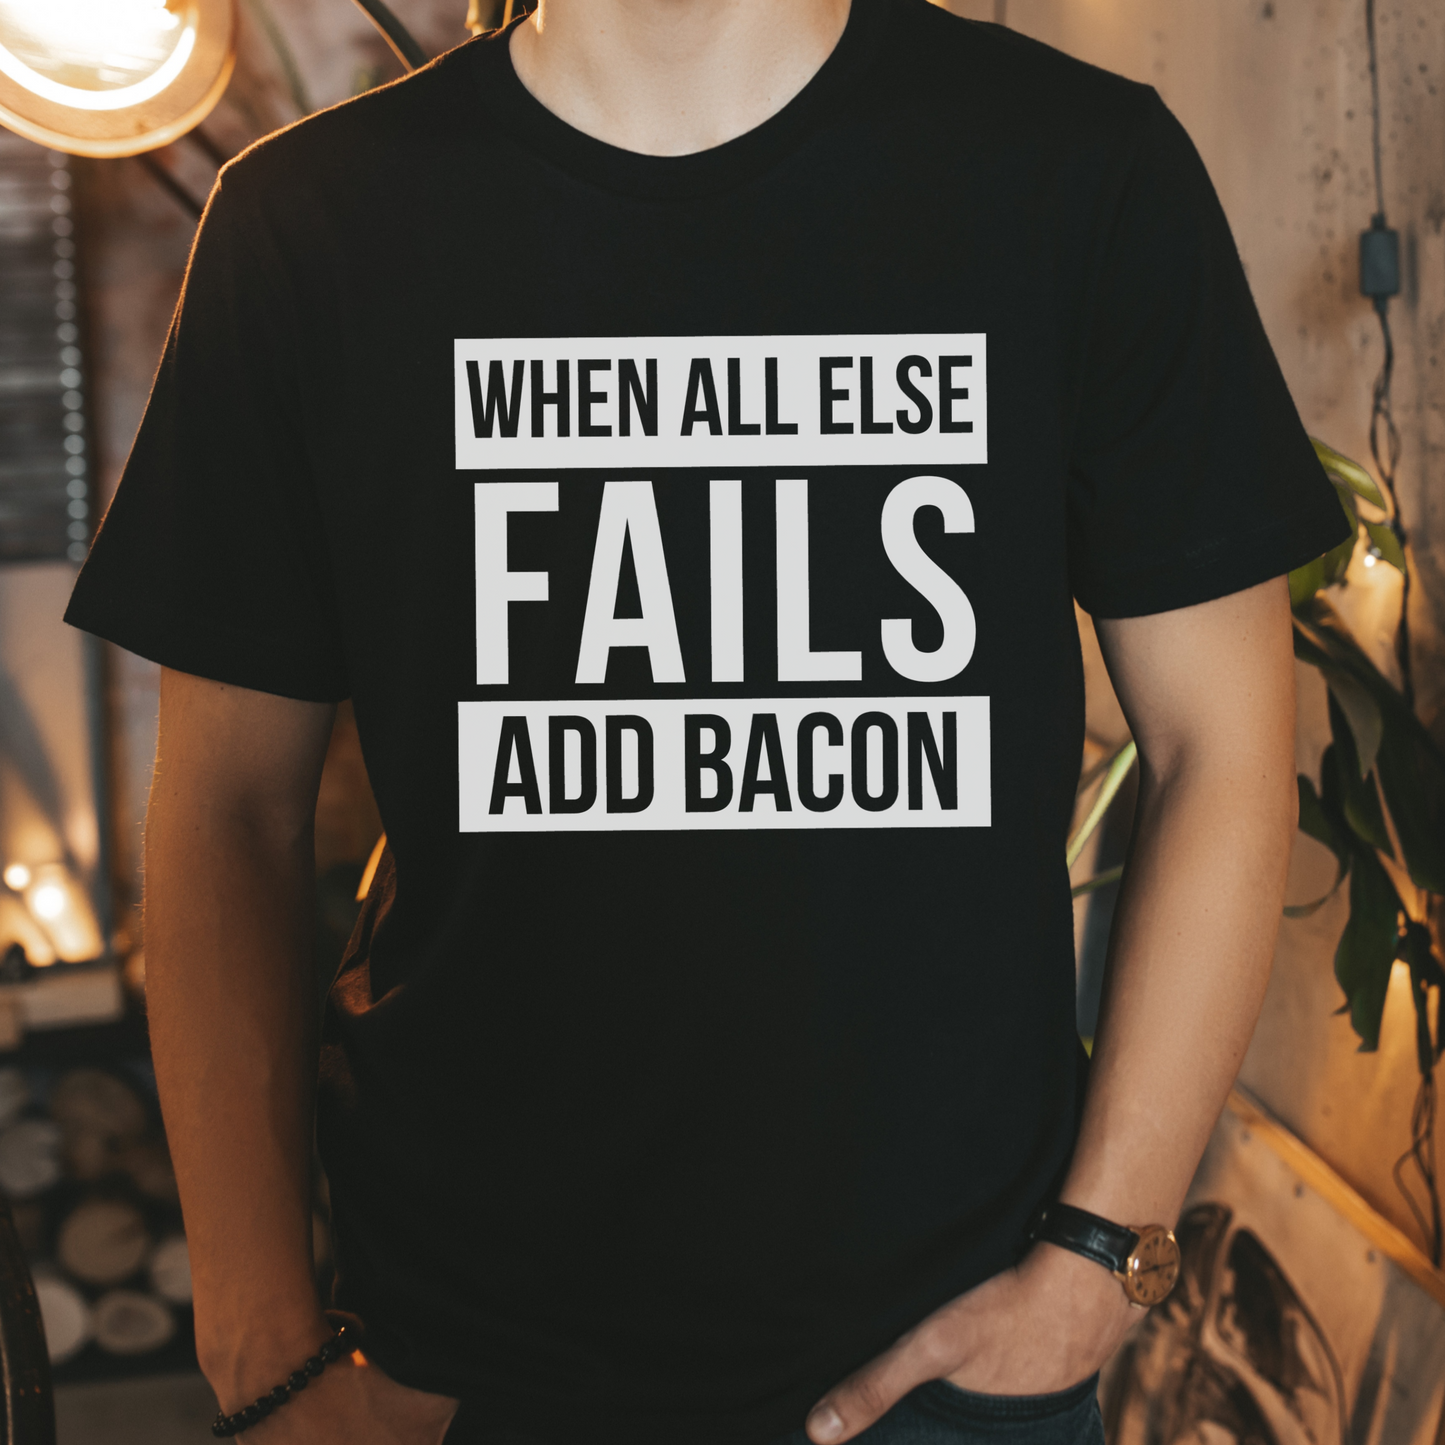 Add Bacon Shirt